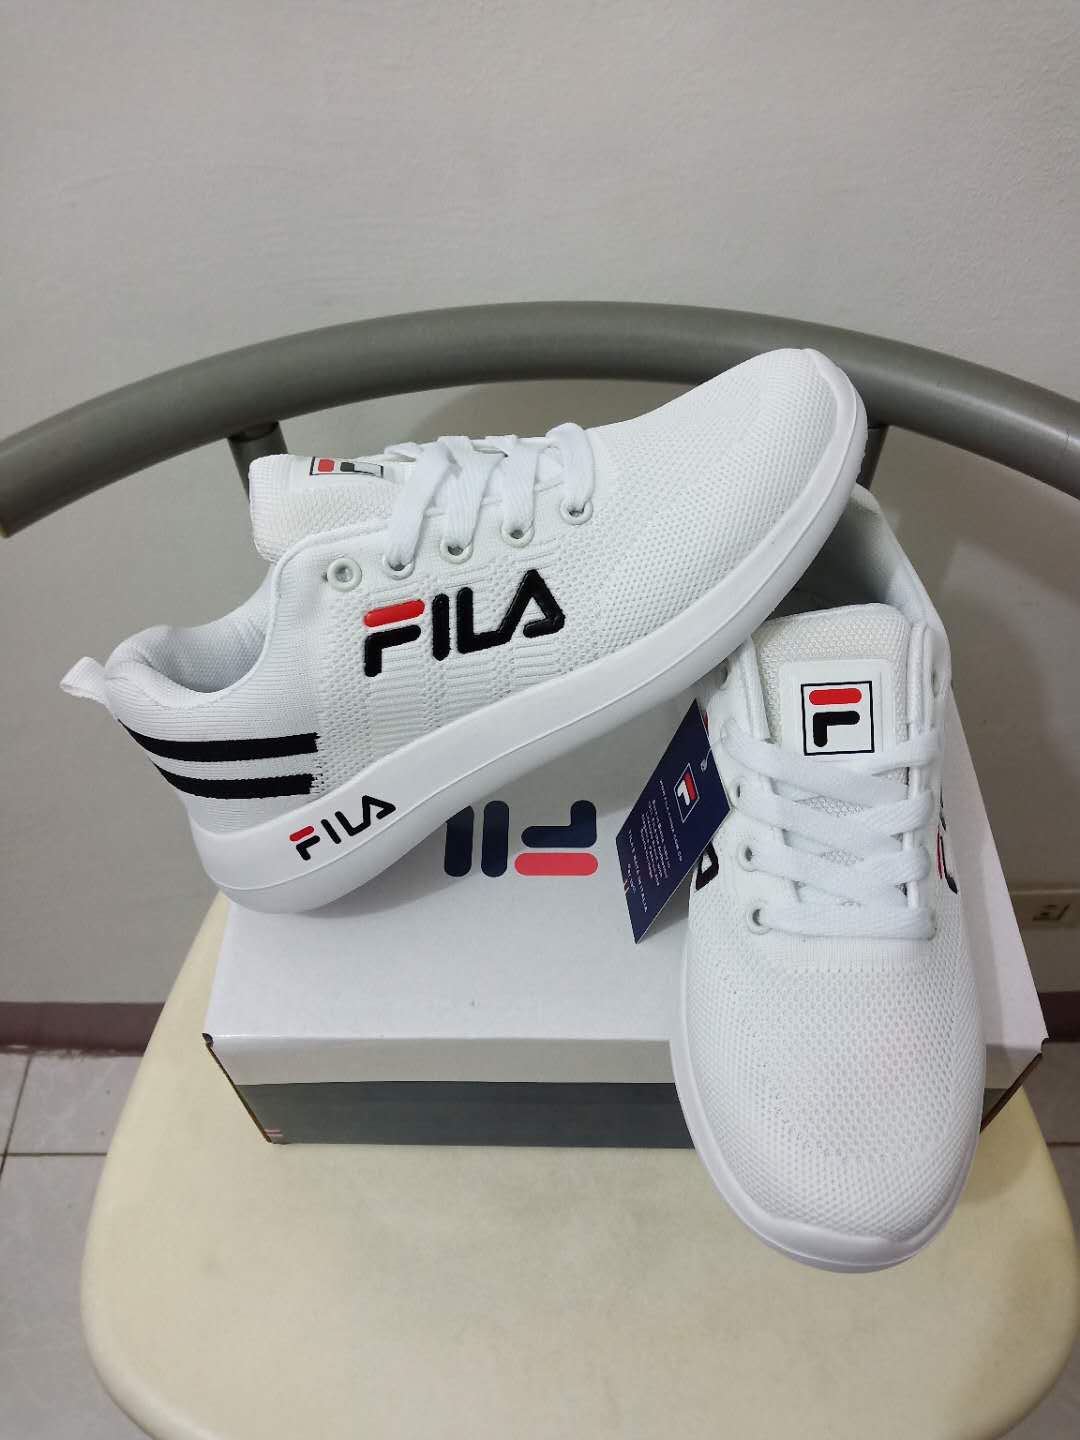 FILA fila New 2019 Running shoes for 